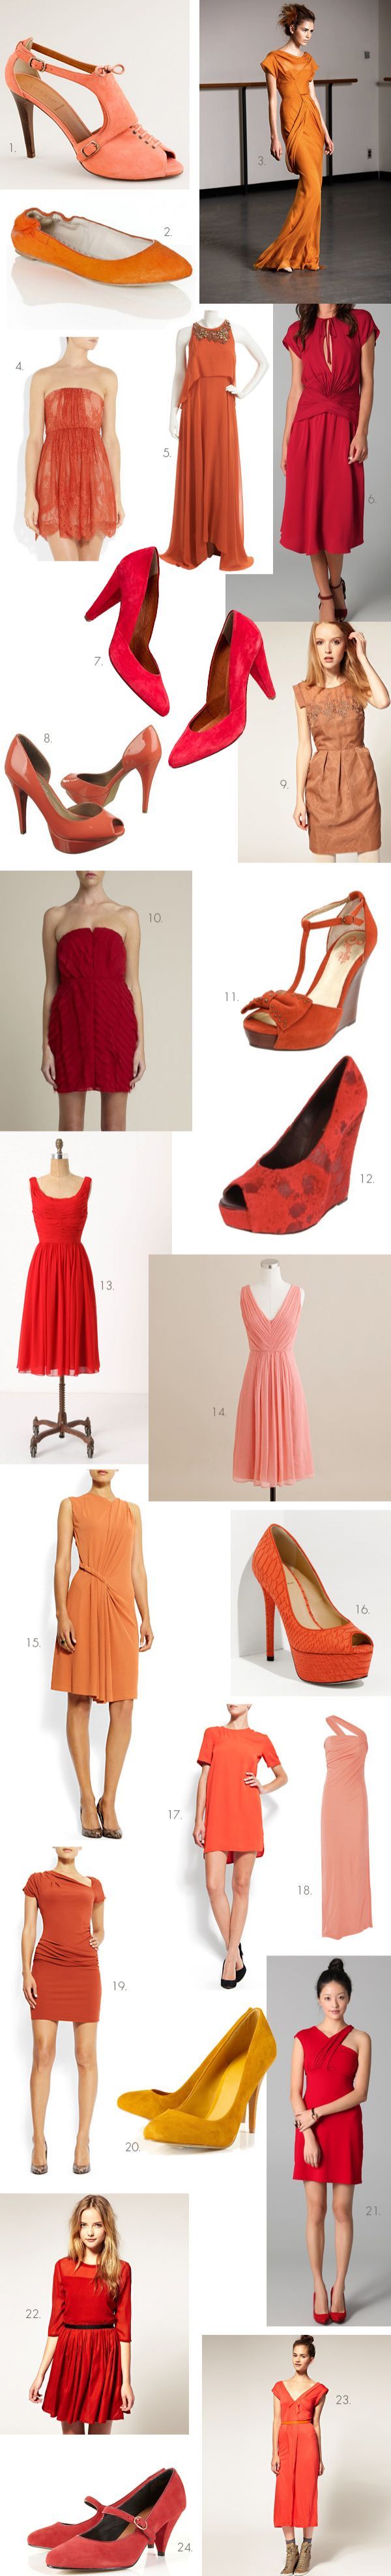 Red Orange Coral Bridesmaid Dresses Shoes